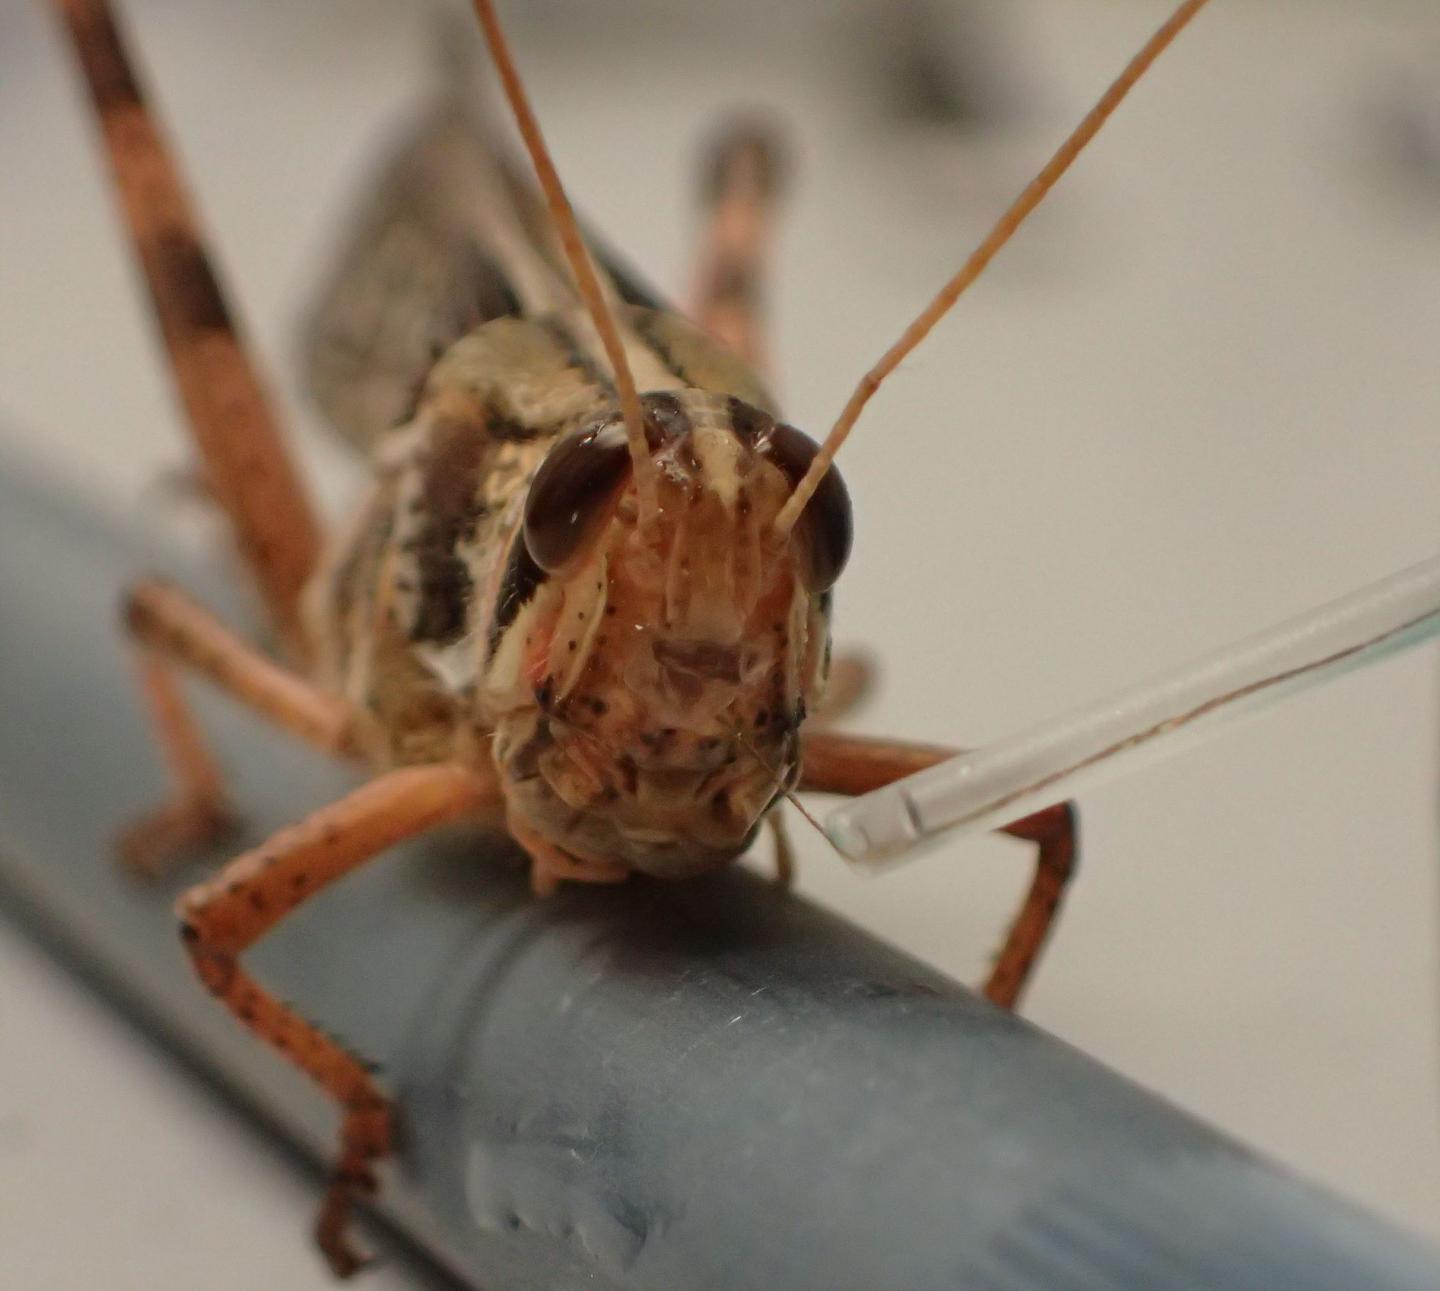 A locust with an improved brain sensor implant. Source: Raman Lab